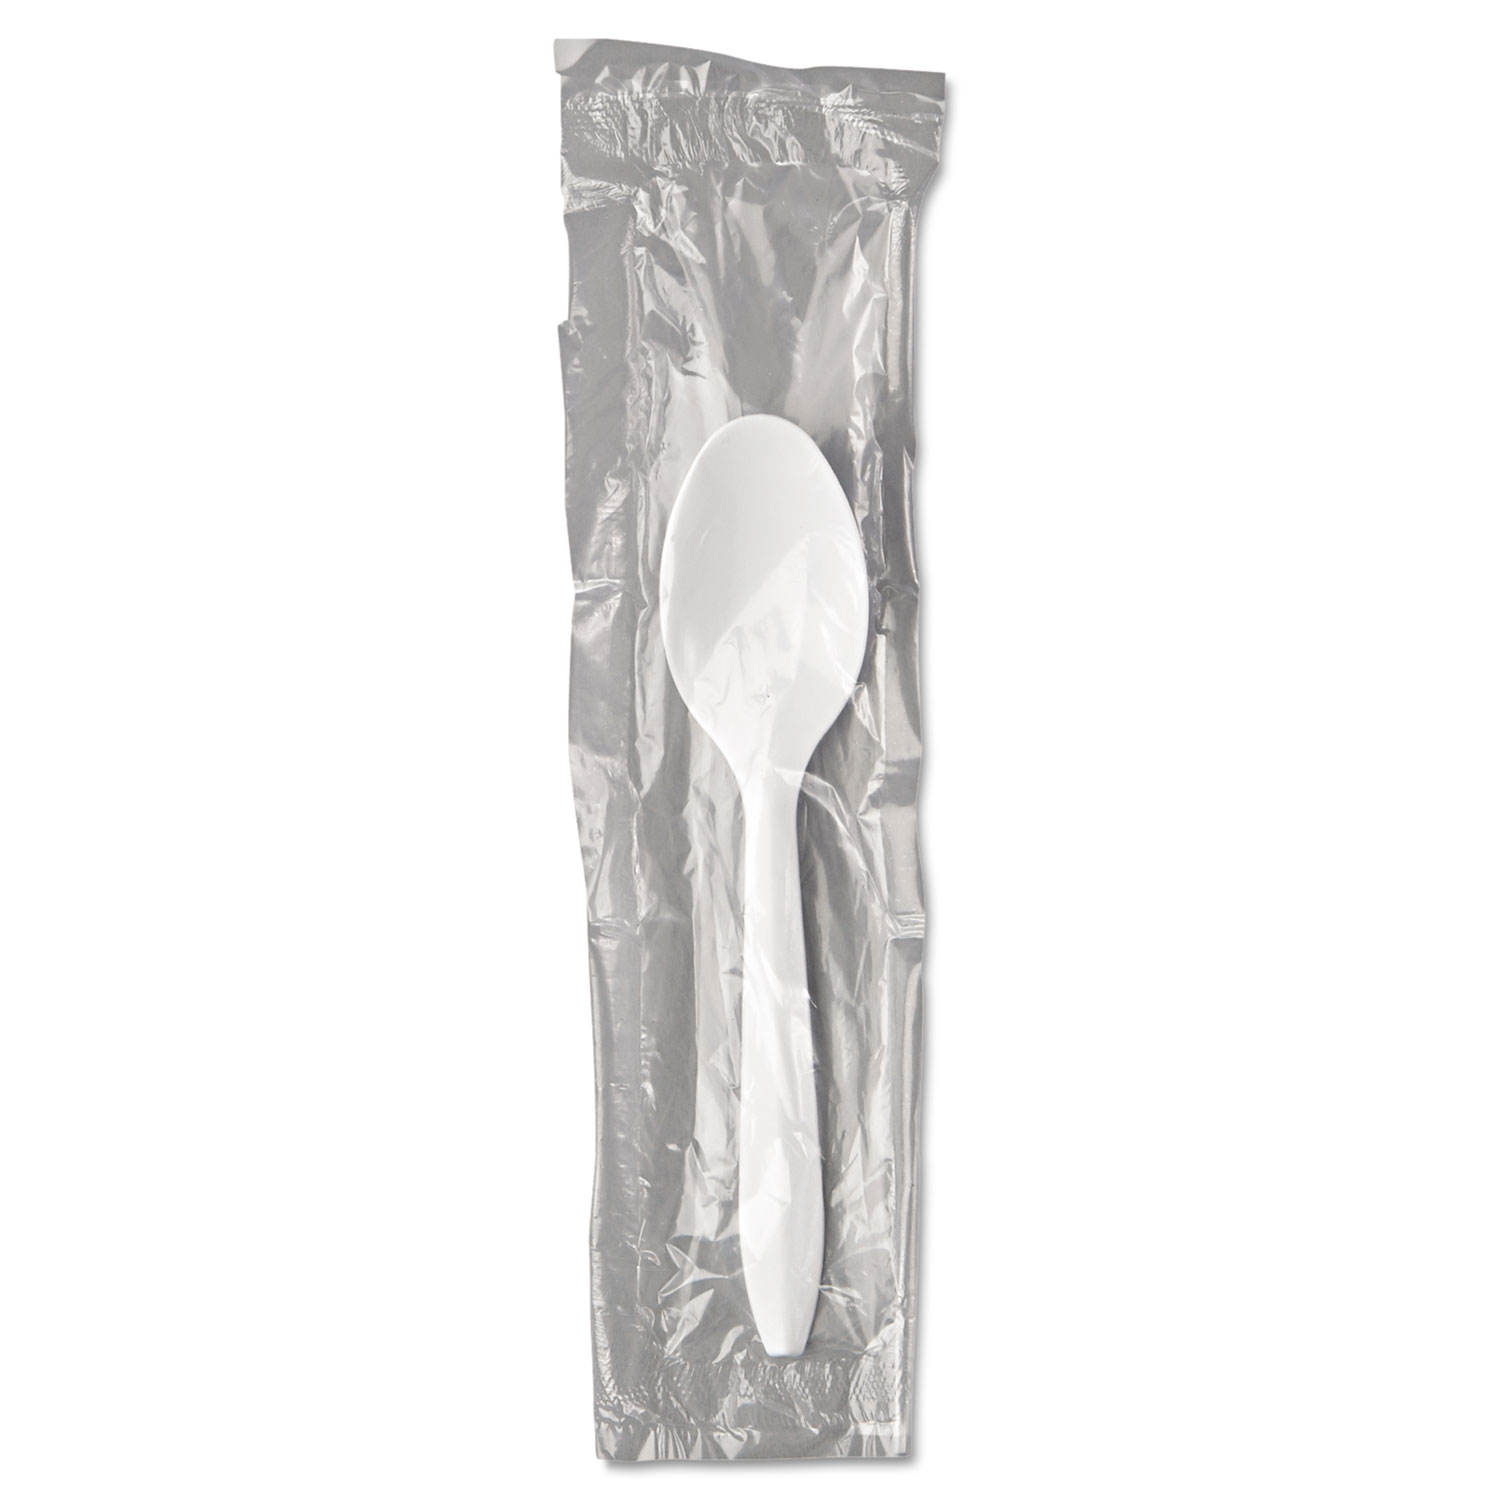 Mediumweight Wrapped Polypropylene Cutlery, Teaspoon, White, 1000/Carton